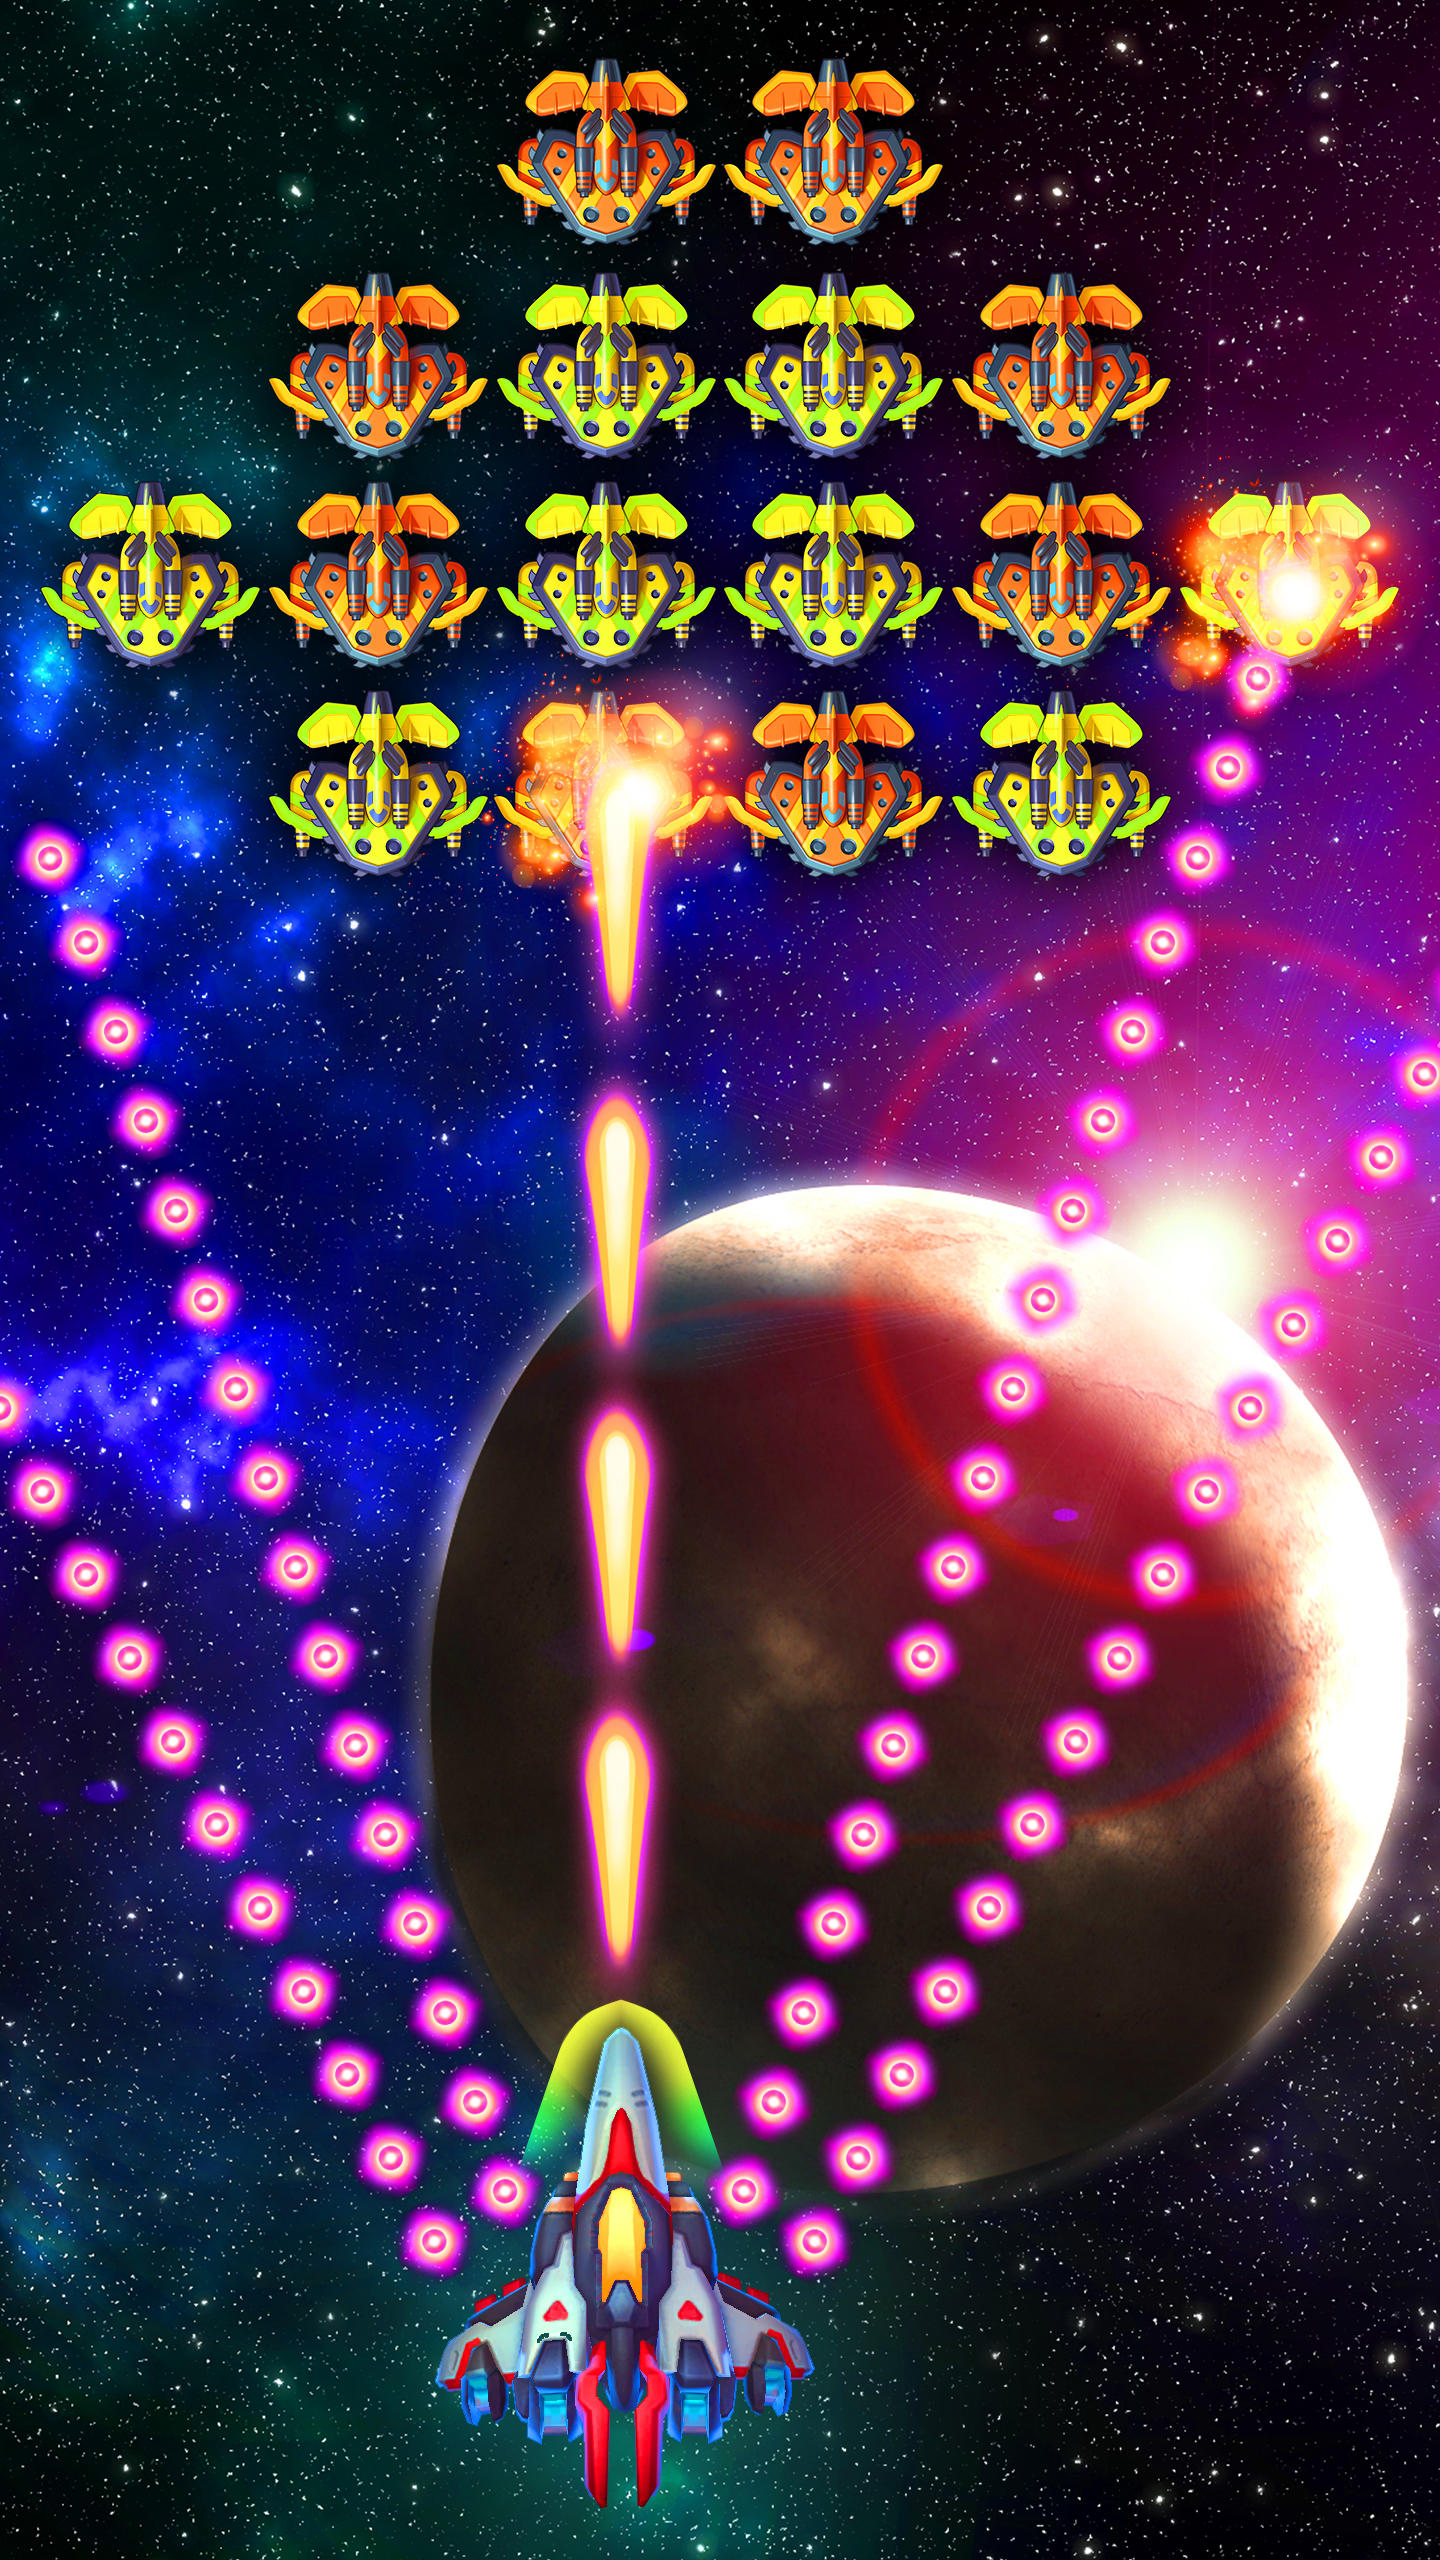 Screenshot 1 of Naves espaciais: Space Justice 14.0.7201